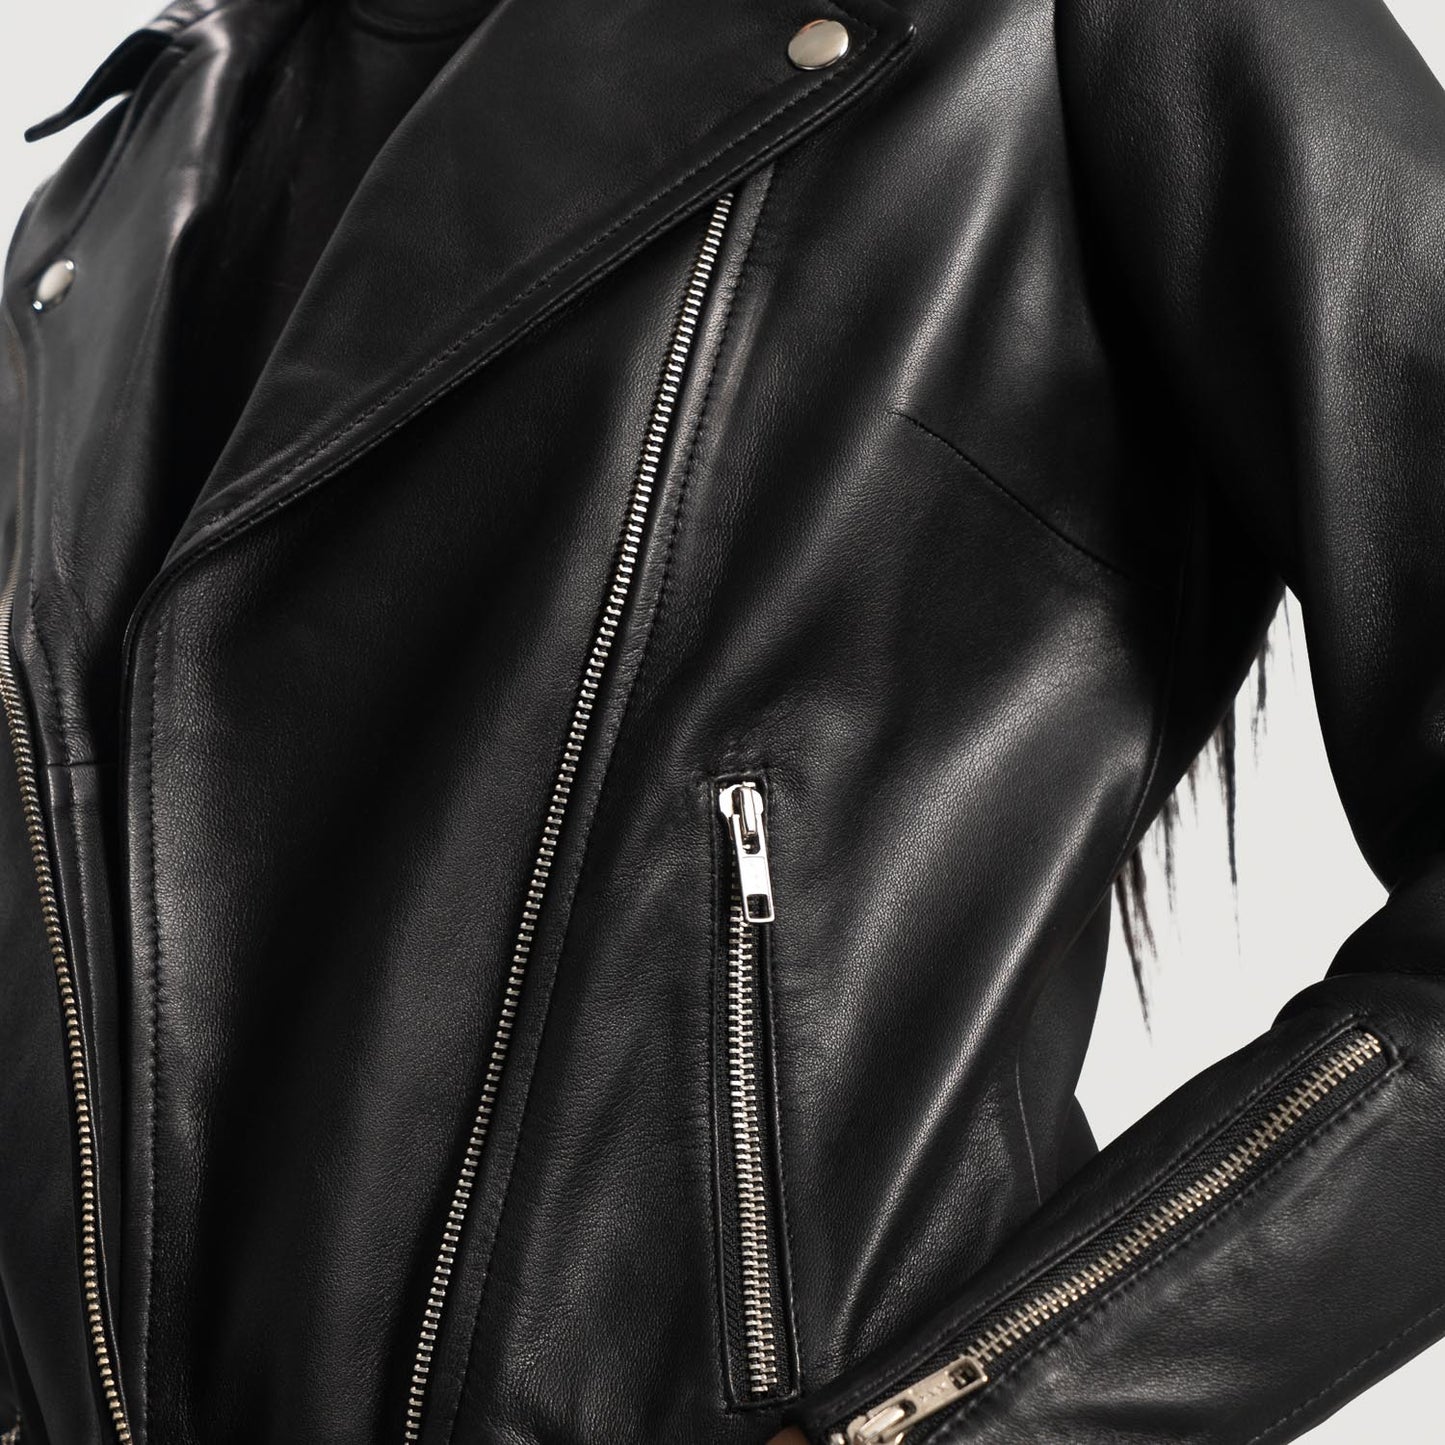 Buy Best Classic Looking Fashion Rumy Black Leather Biker Jacket